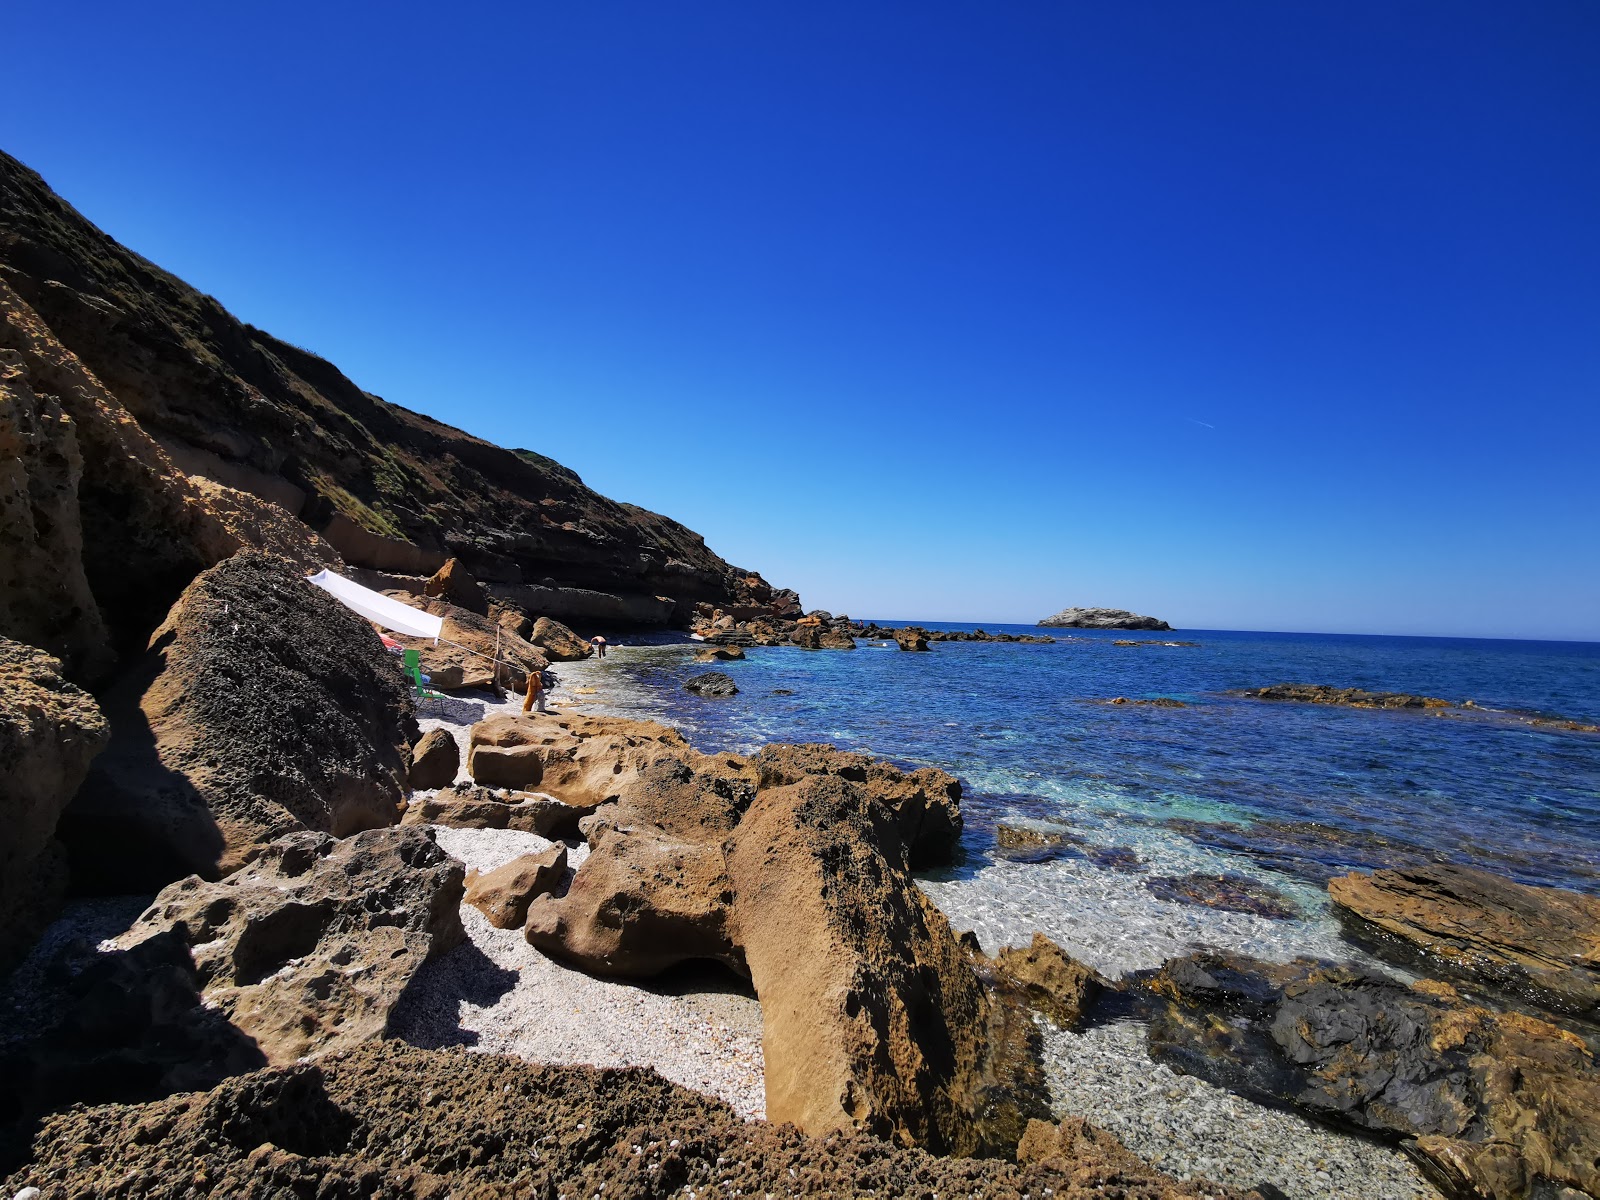 Photo of Spiaggia Di Rena Majore and its beautiful scenery